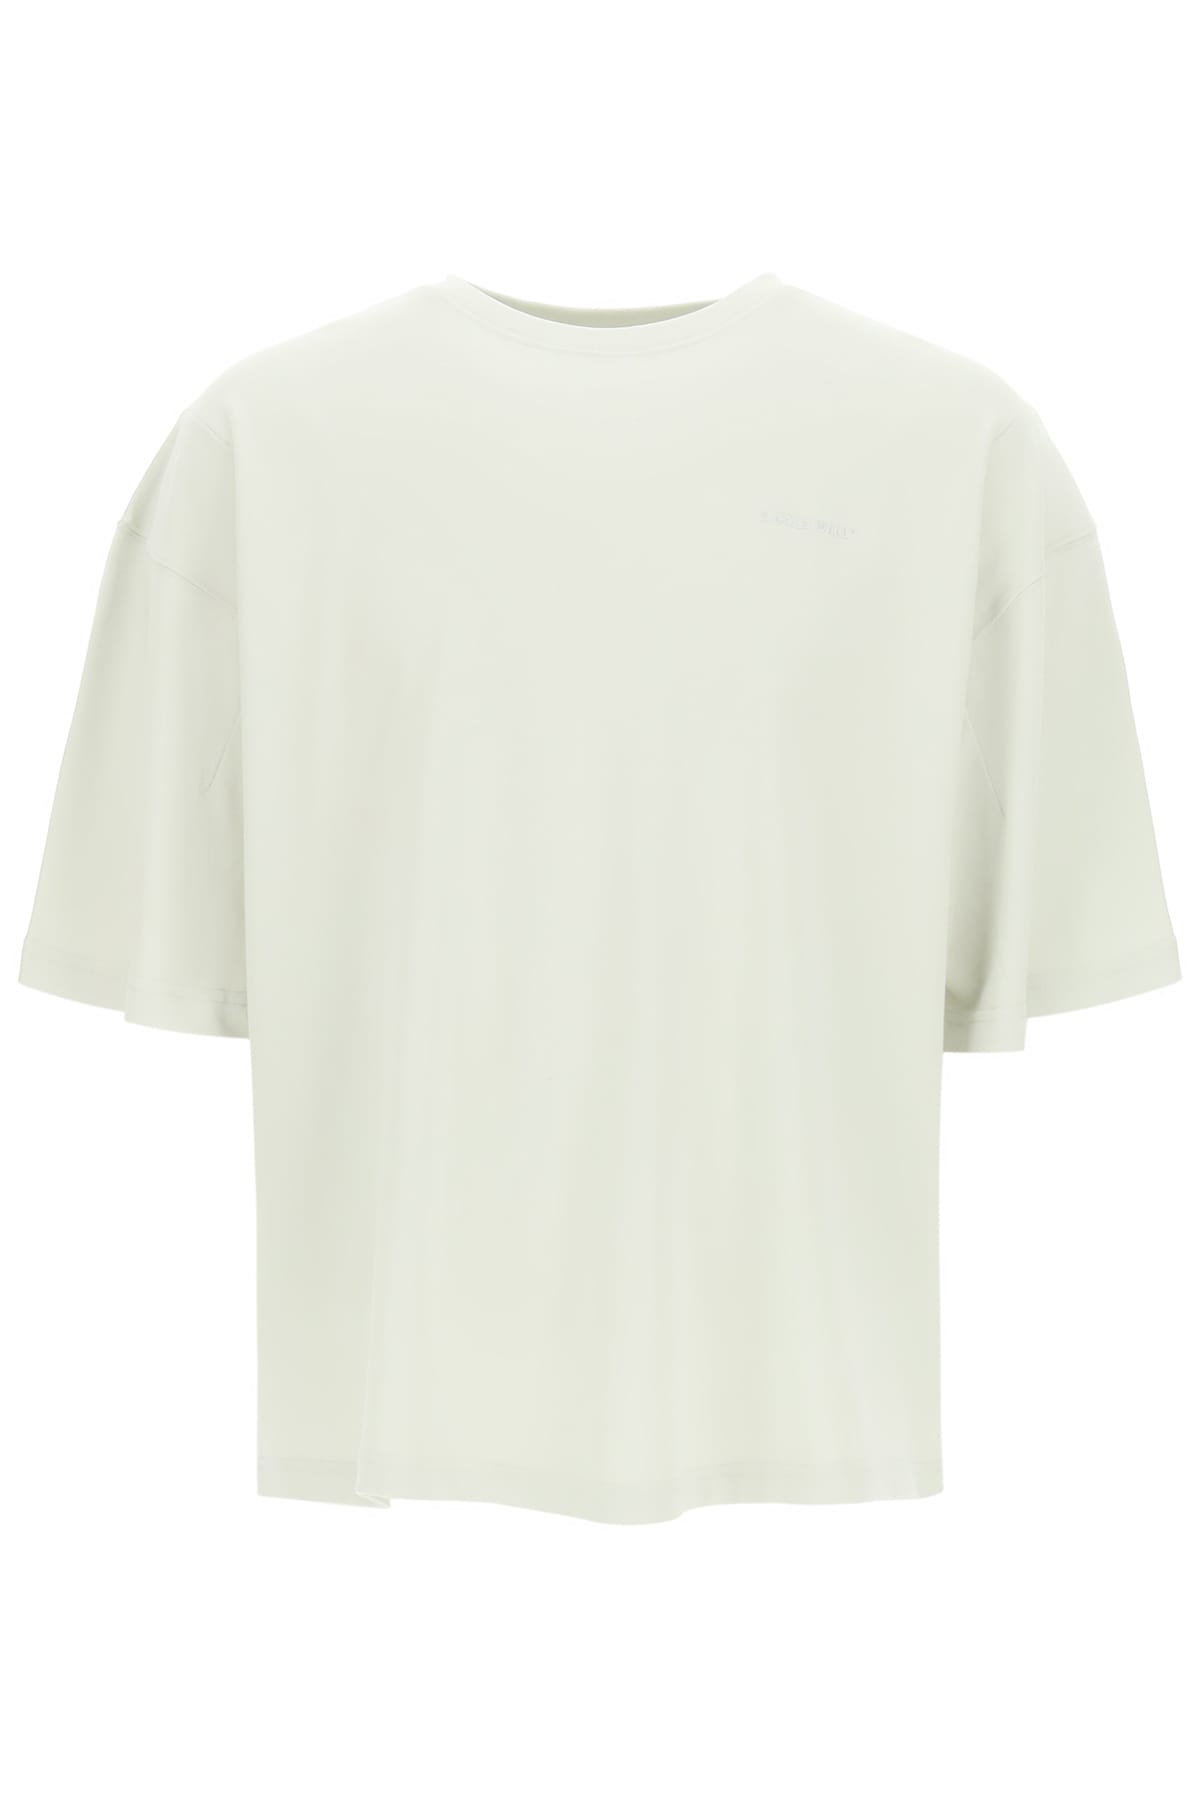 A-COLD-WALL Heightfield T-shirt